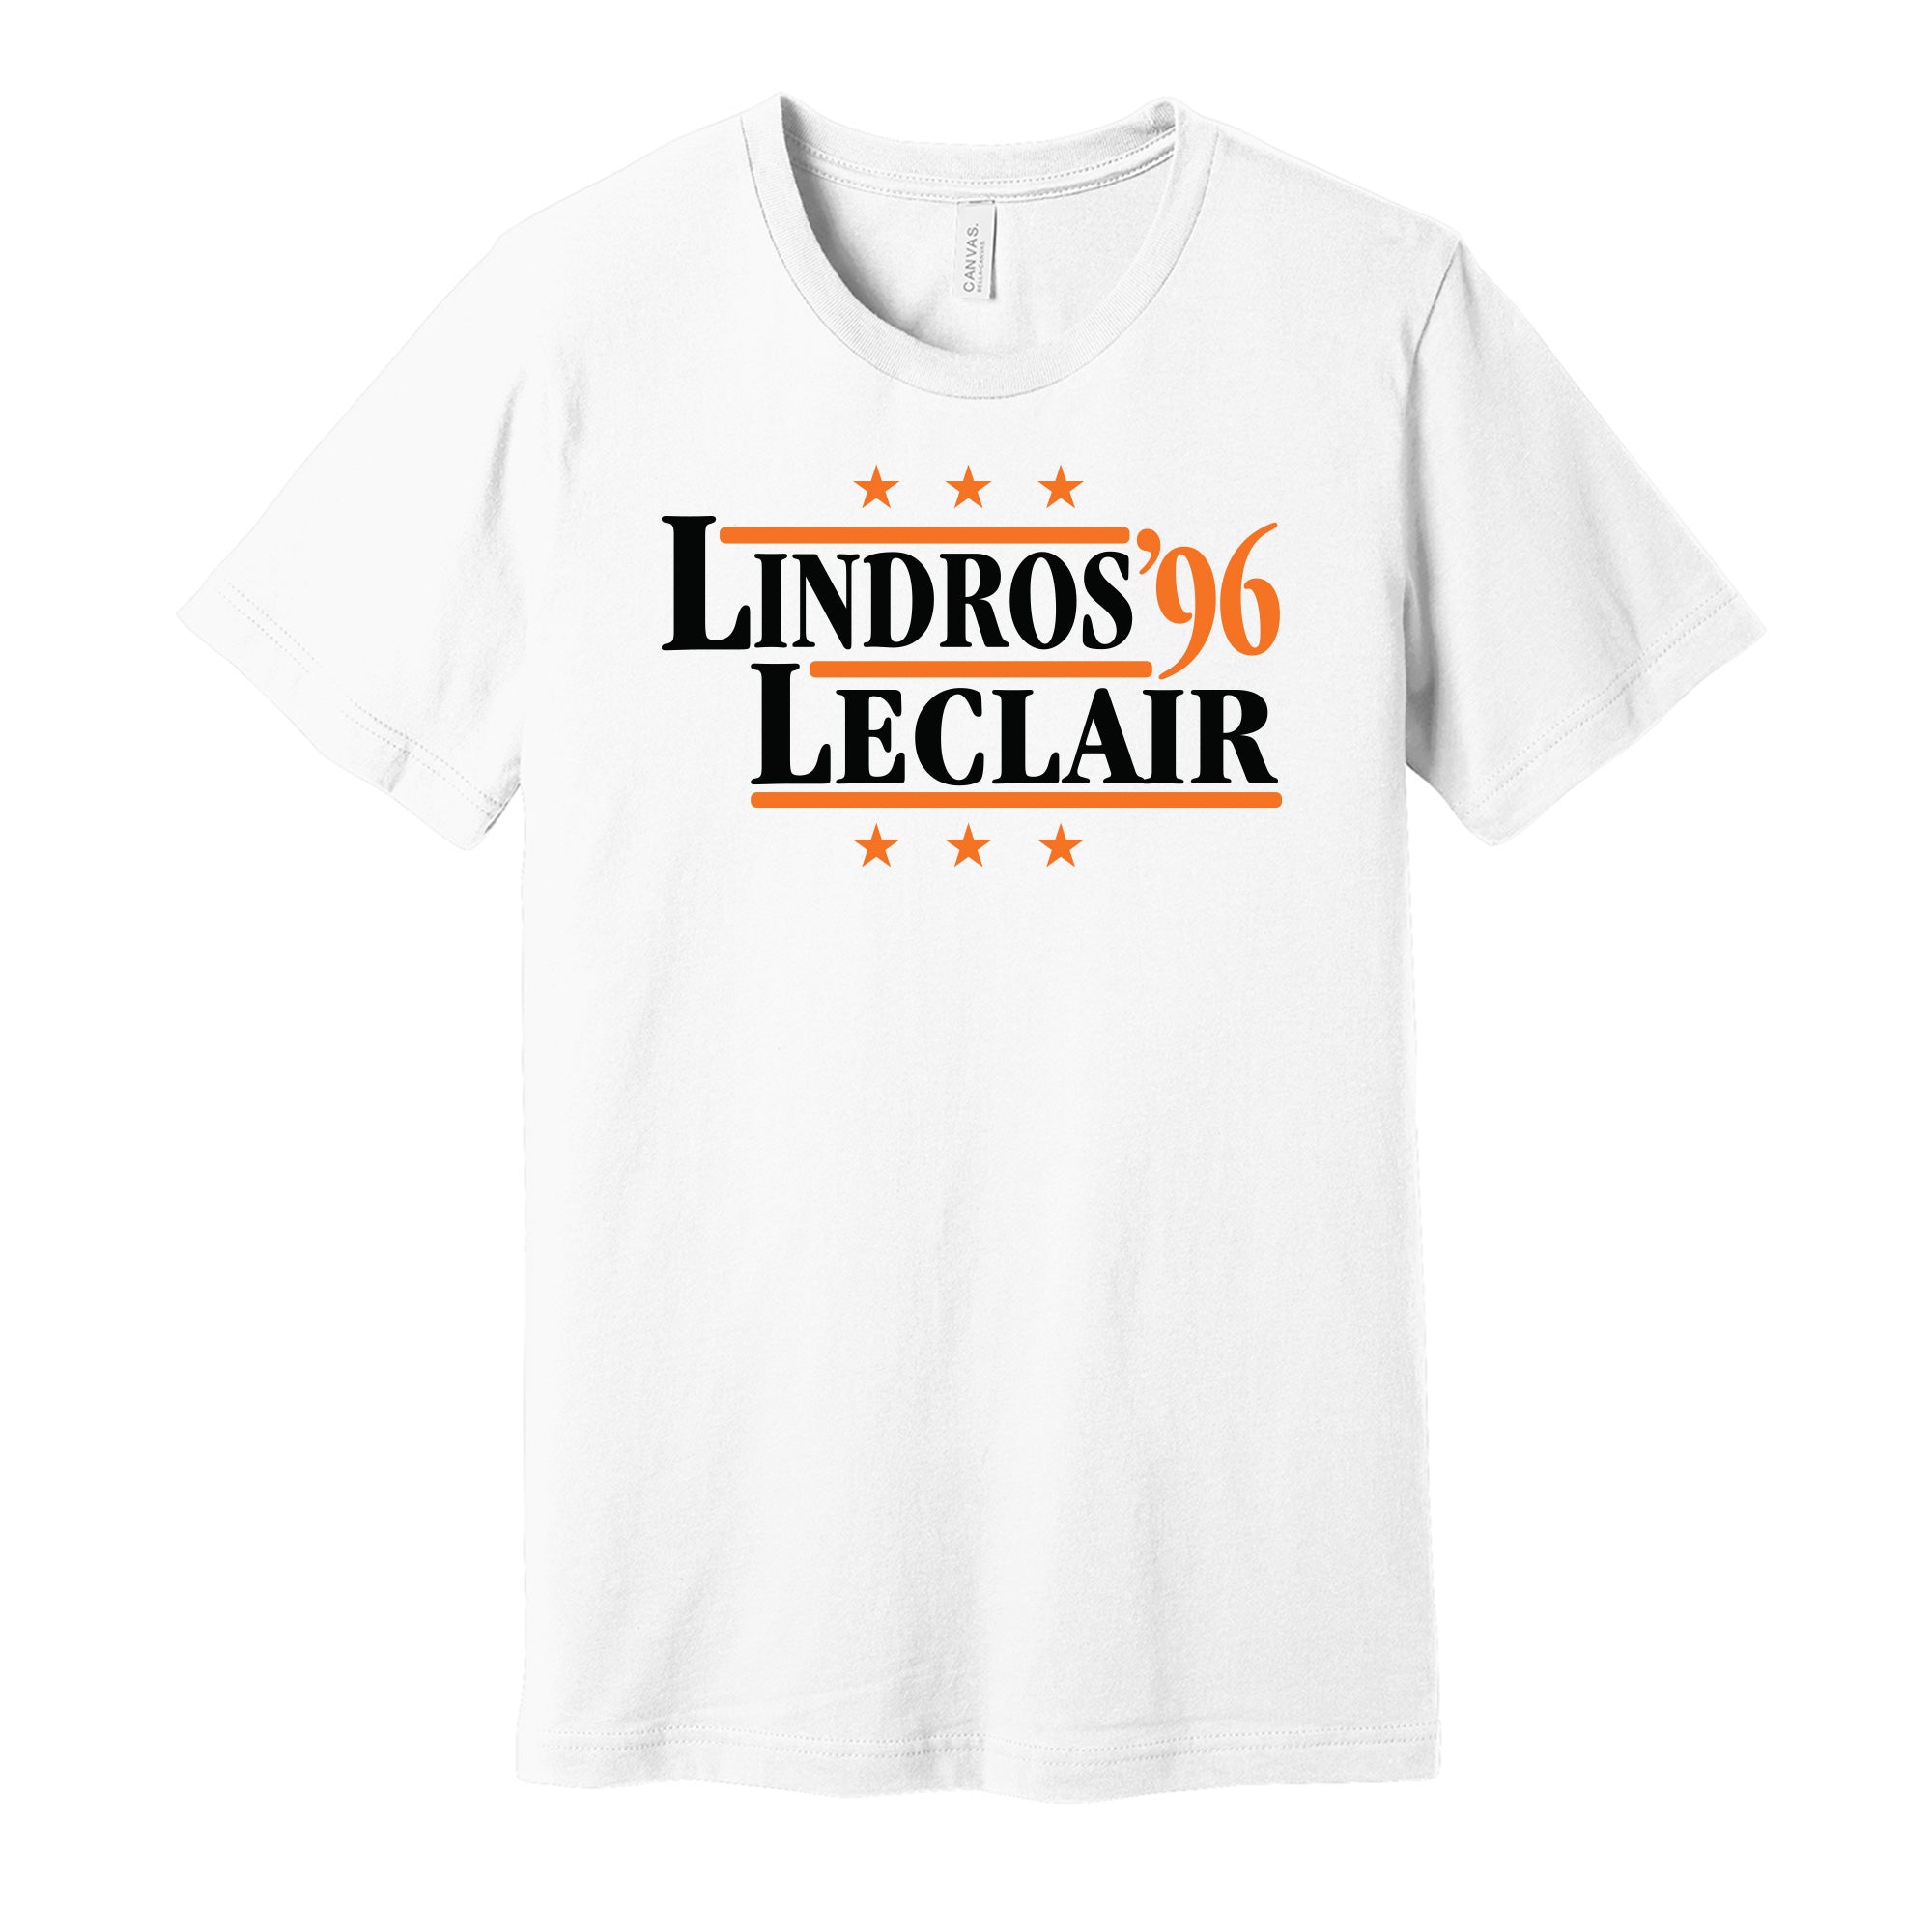 Sell The Team Crying Jordan Philadelphia Flyers Shirt - Limotees